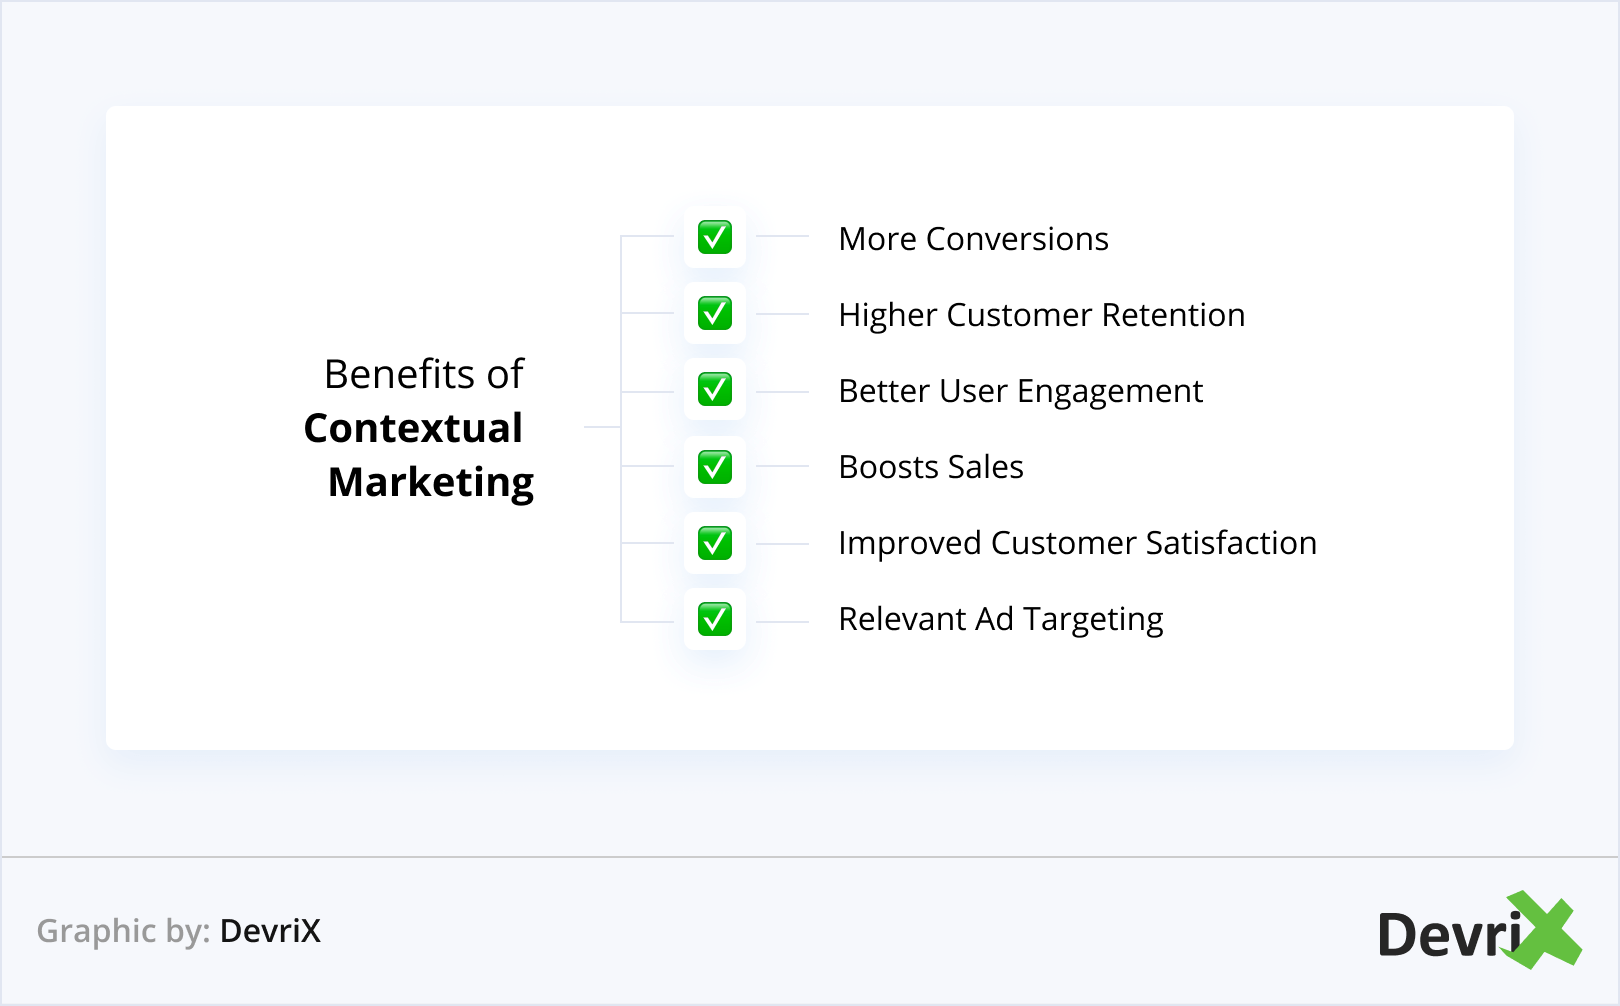 Benefits of Contextual Marketing